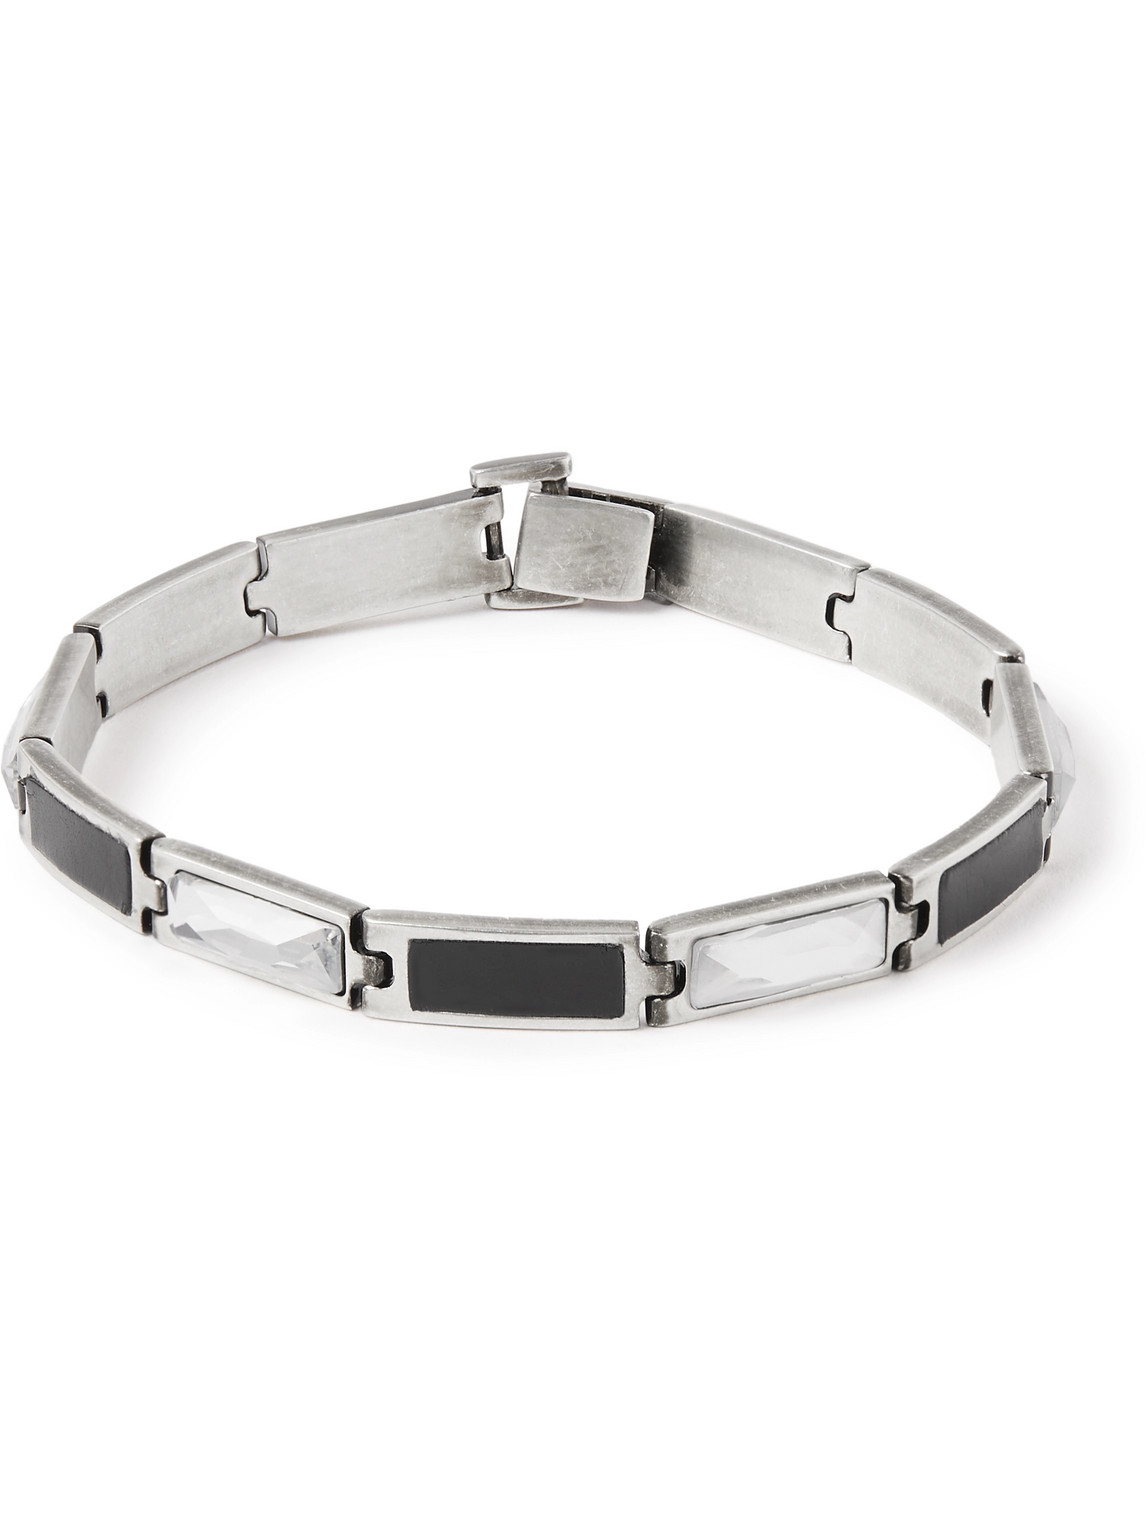 Saint Laurent Silver-tone, Leather And Glass Bracelet